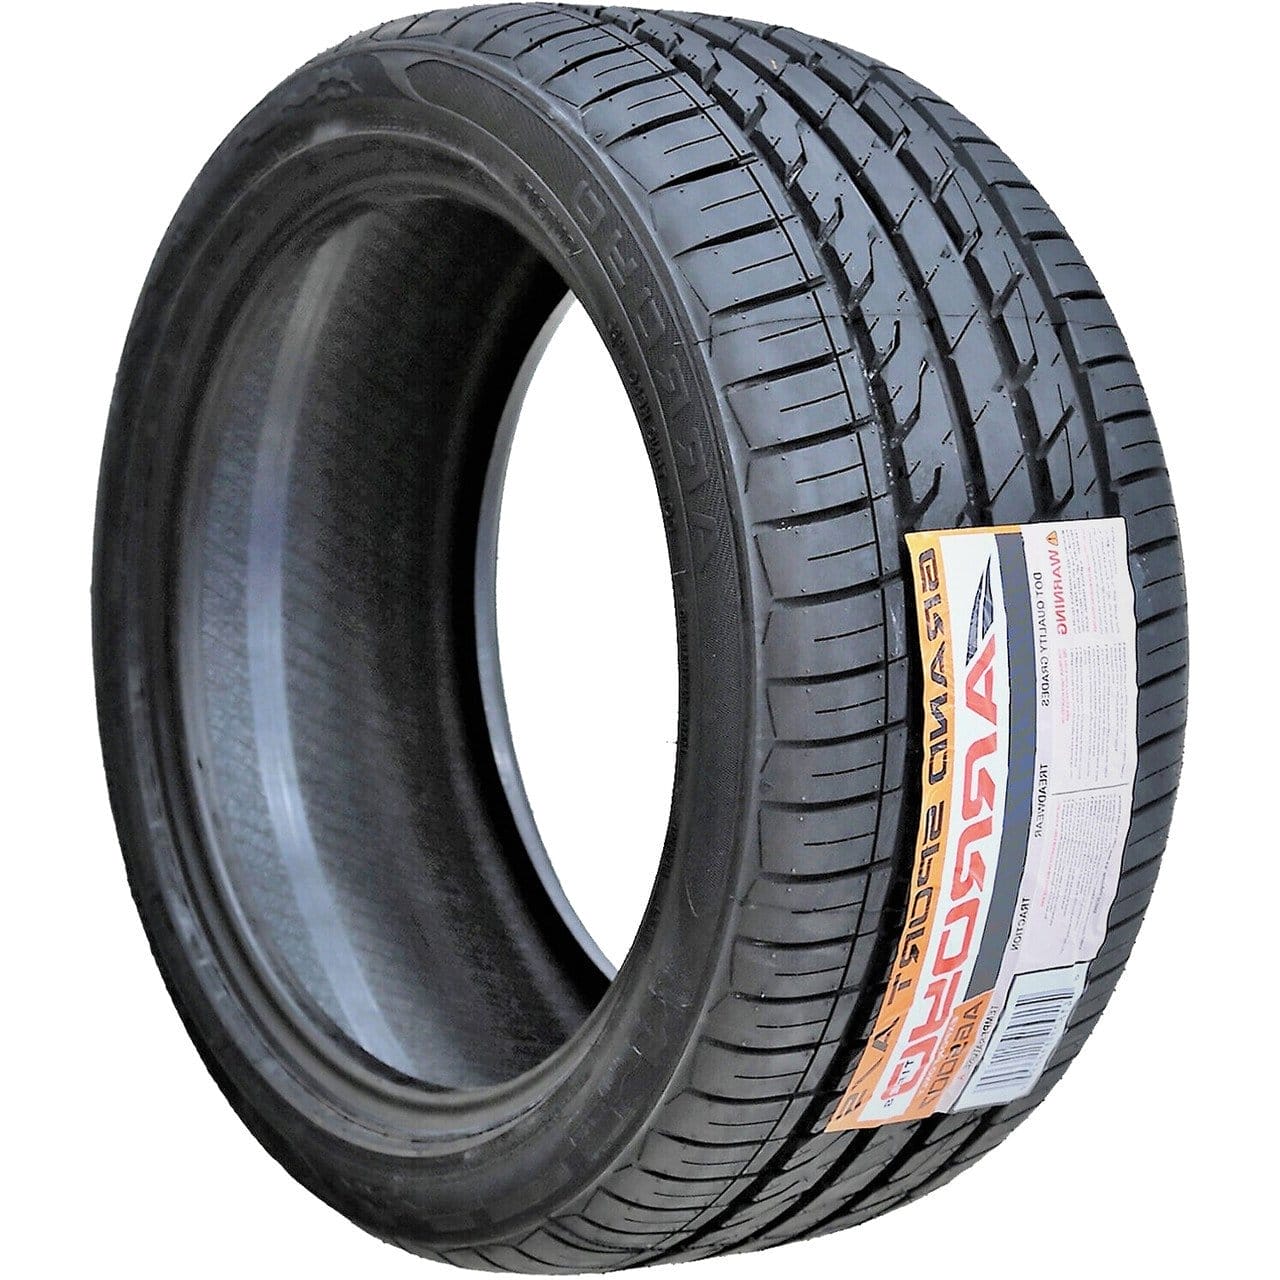 Image of Arroyo Grand Sport A/S 215/40R18 ZR 89W XL AS All Season Tire